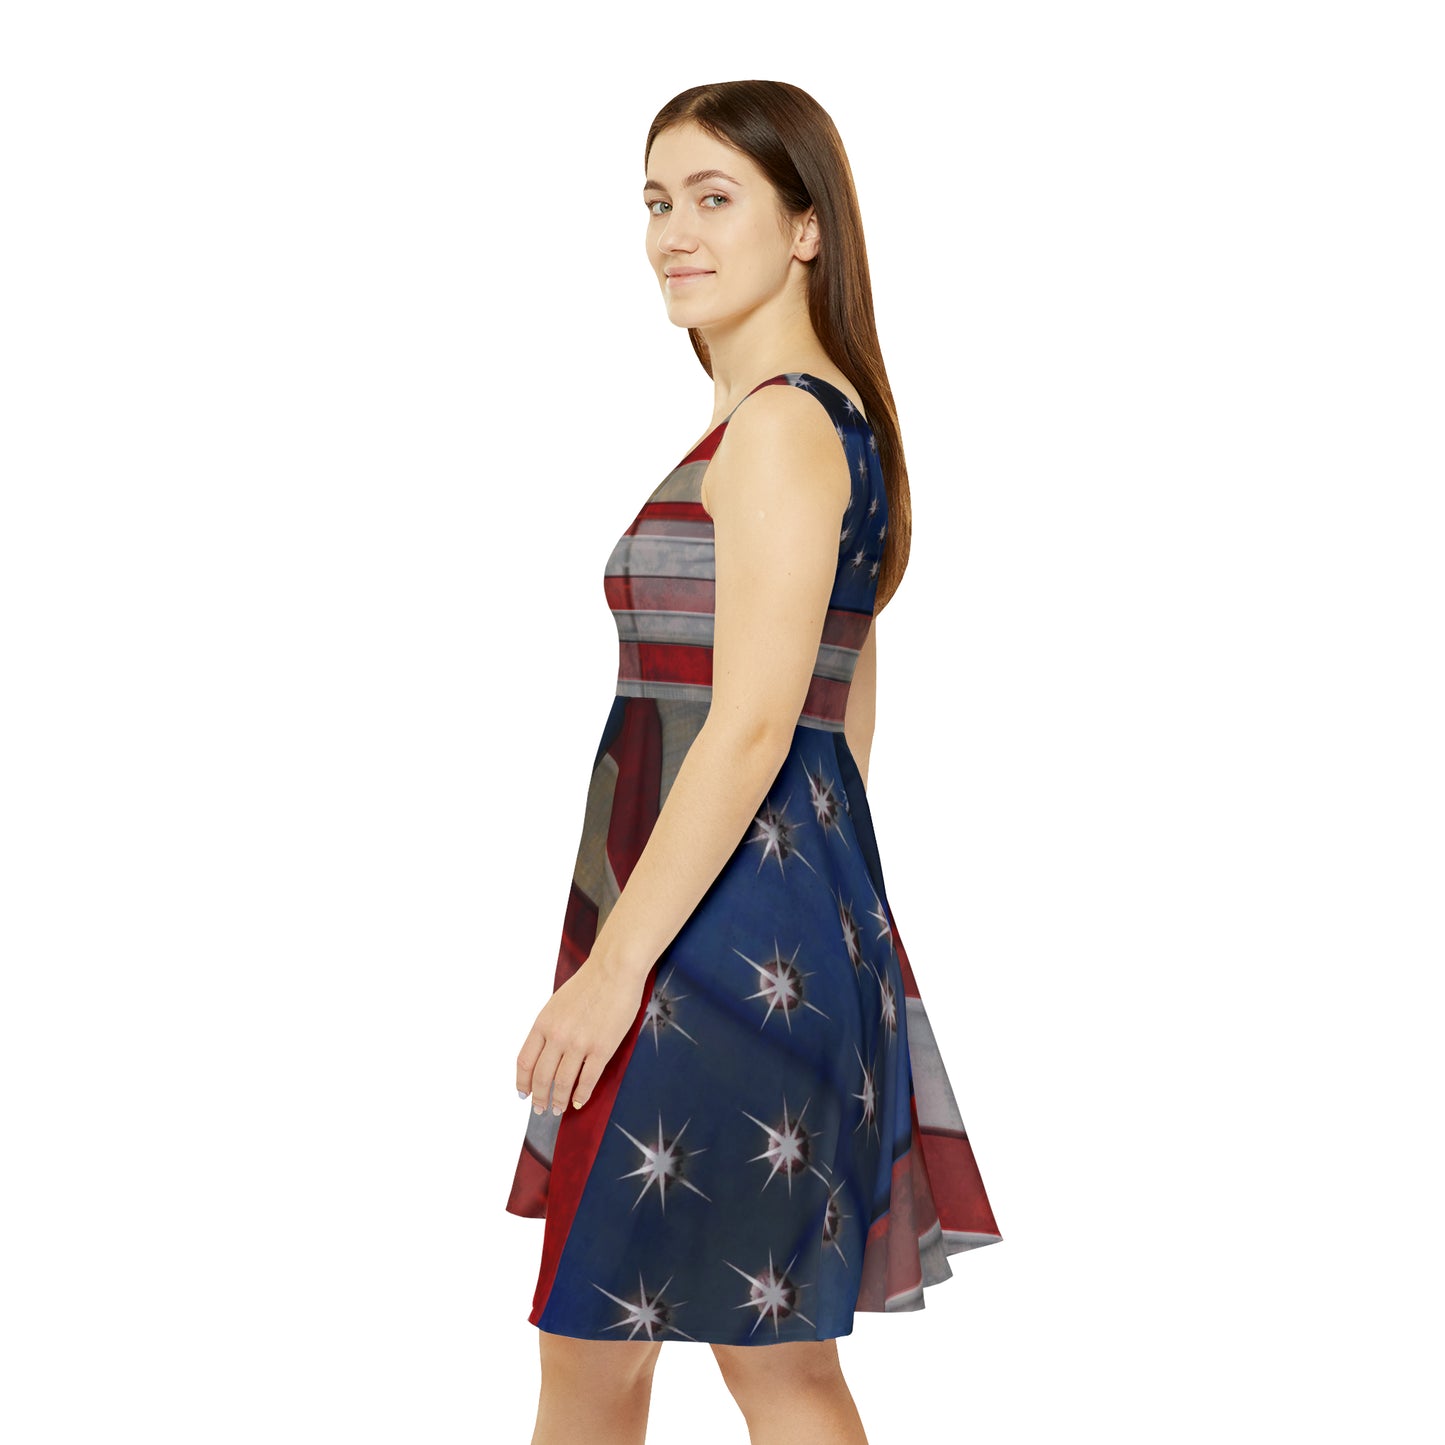 American Flag Quilt Women's Skater Dress (AOP)